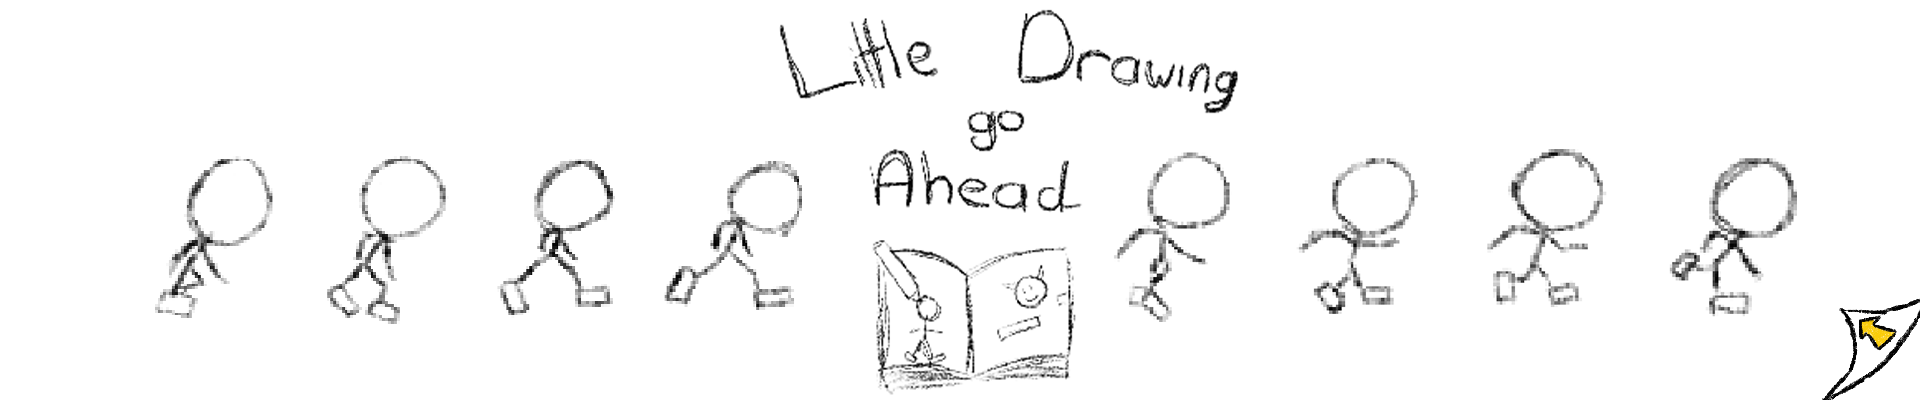 Little Drawing Go Ahead